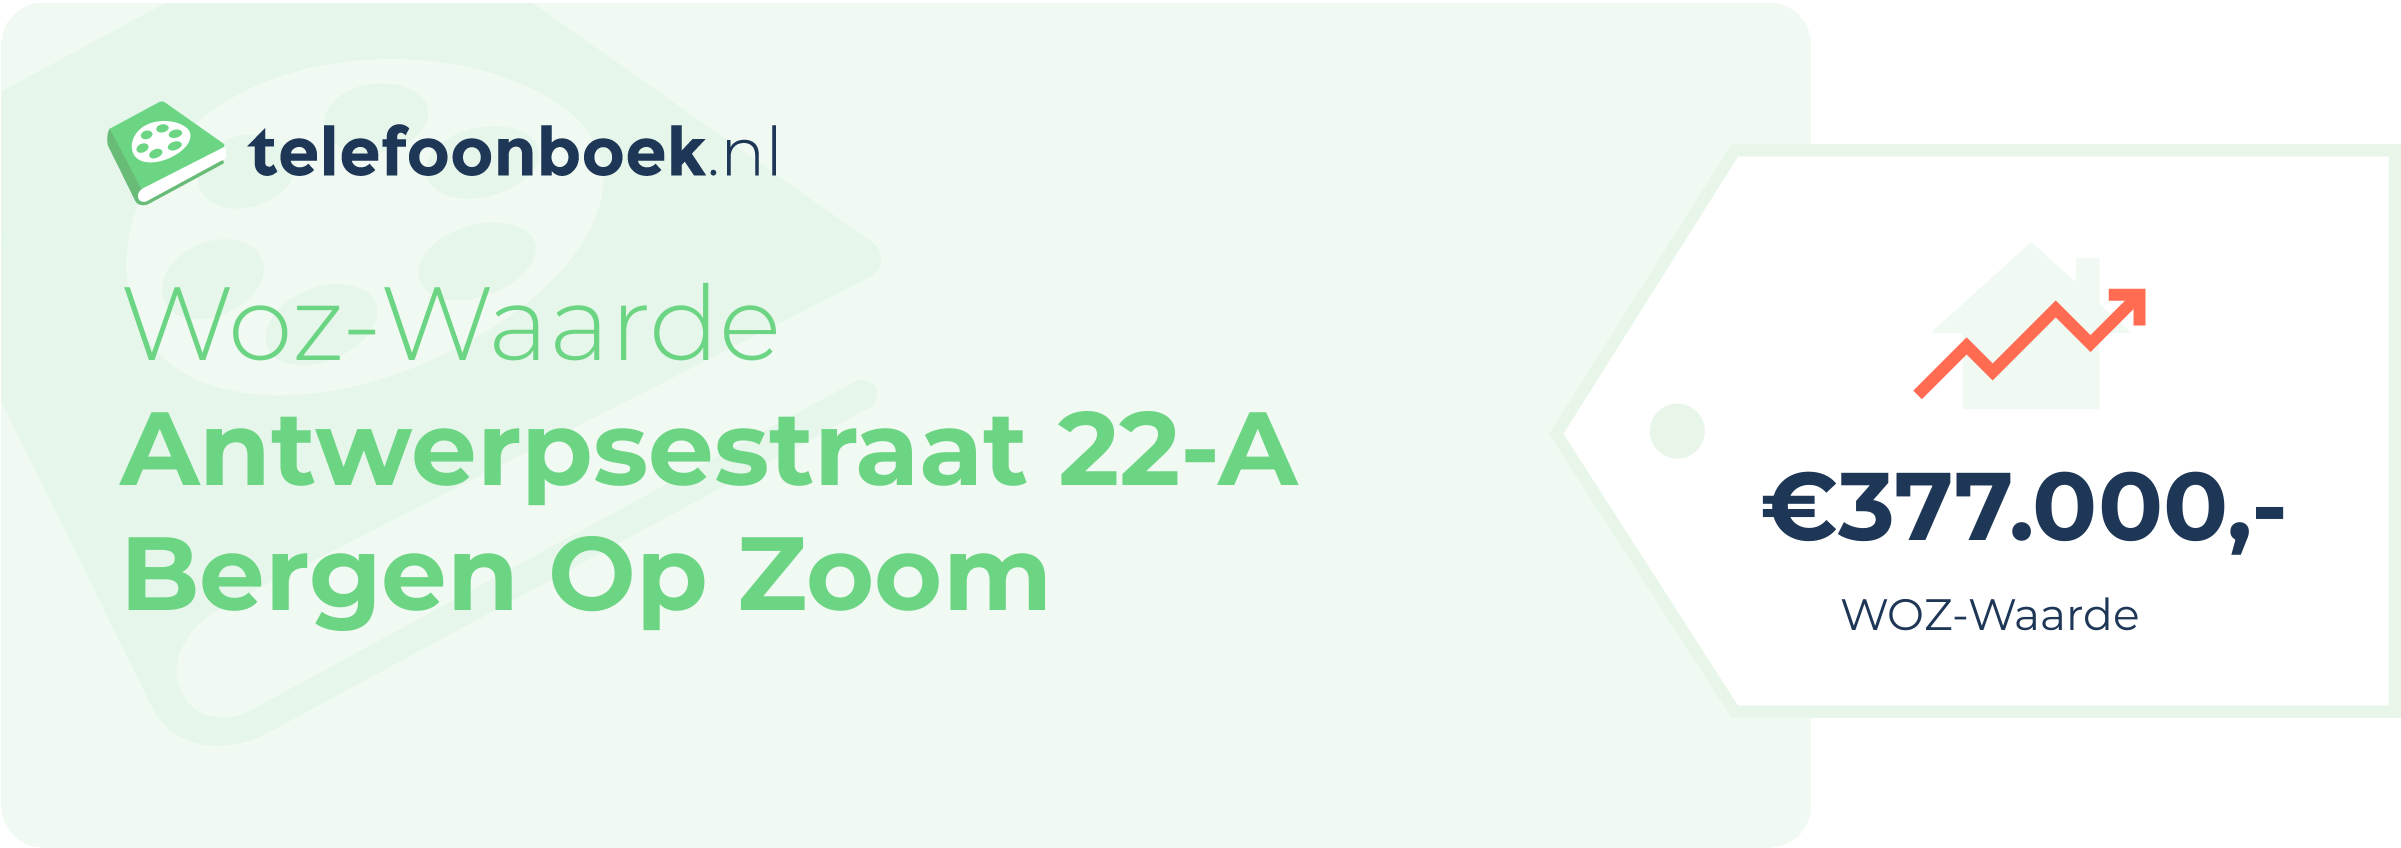 WOZ-waarde Antwerpsestraat 22-A Bergen Op Zoom